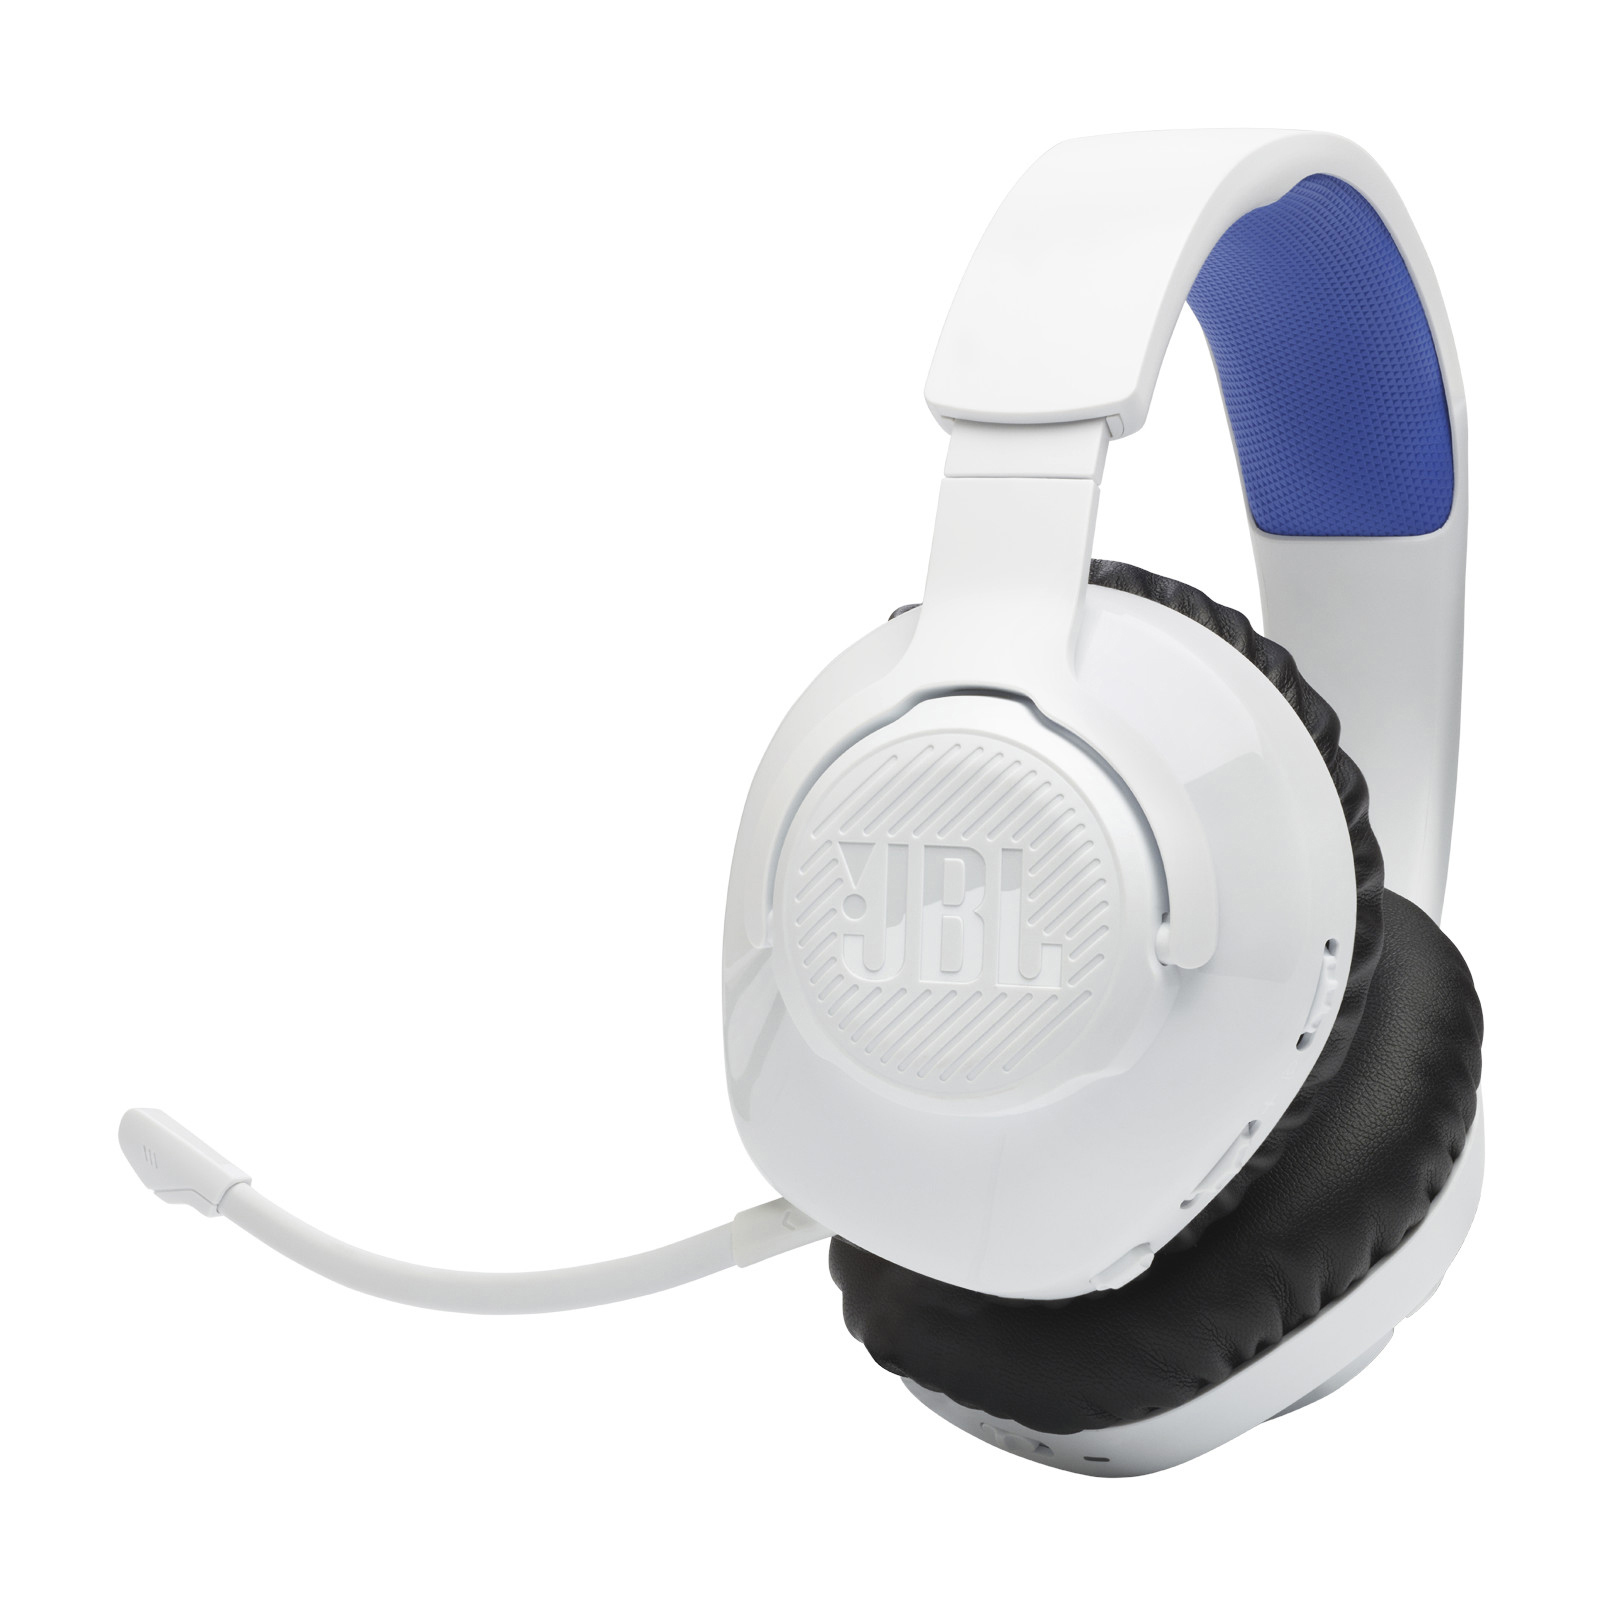 JBL Quantum Bluetooth WL 360P White/Blue, Weiß/Blau Gaming Headset Over-ear